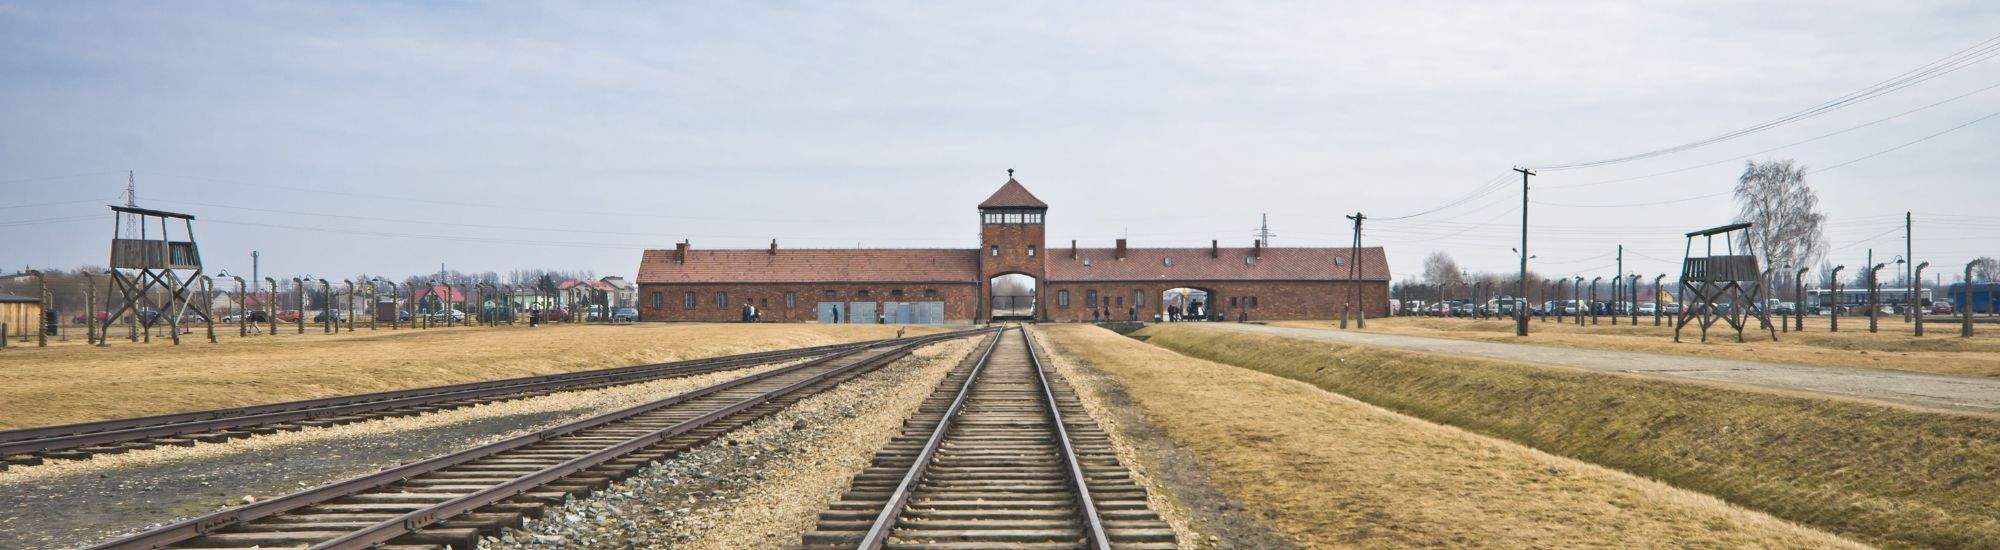 USA støtter virtuell omvisning av Auschwitz-Birkenau